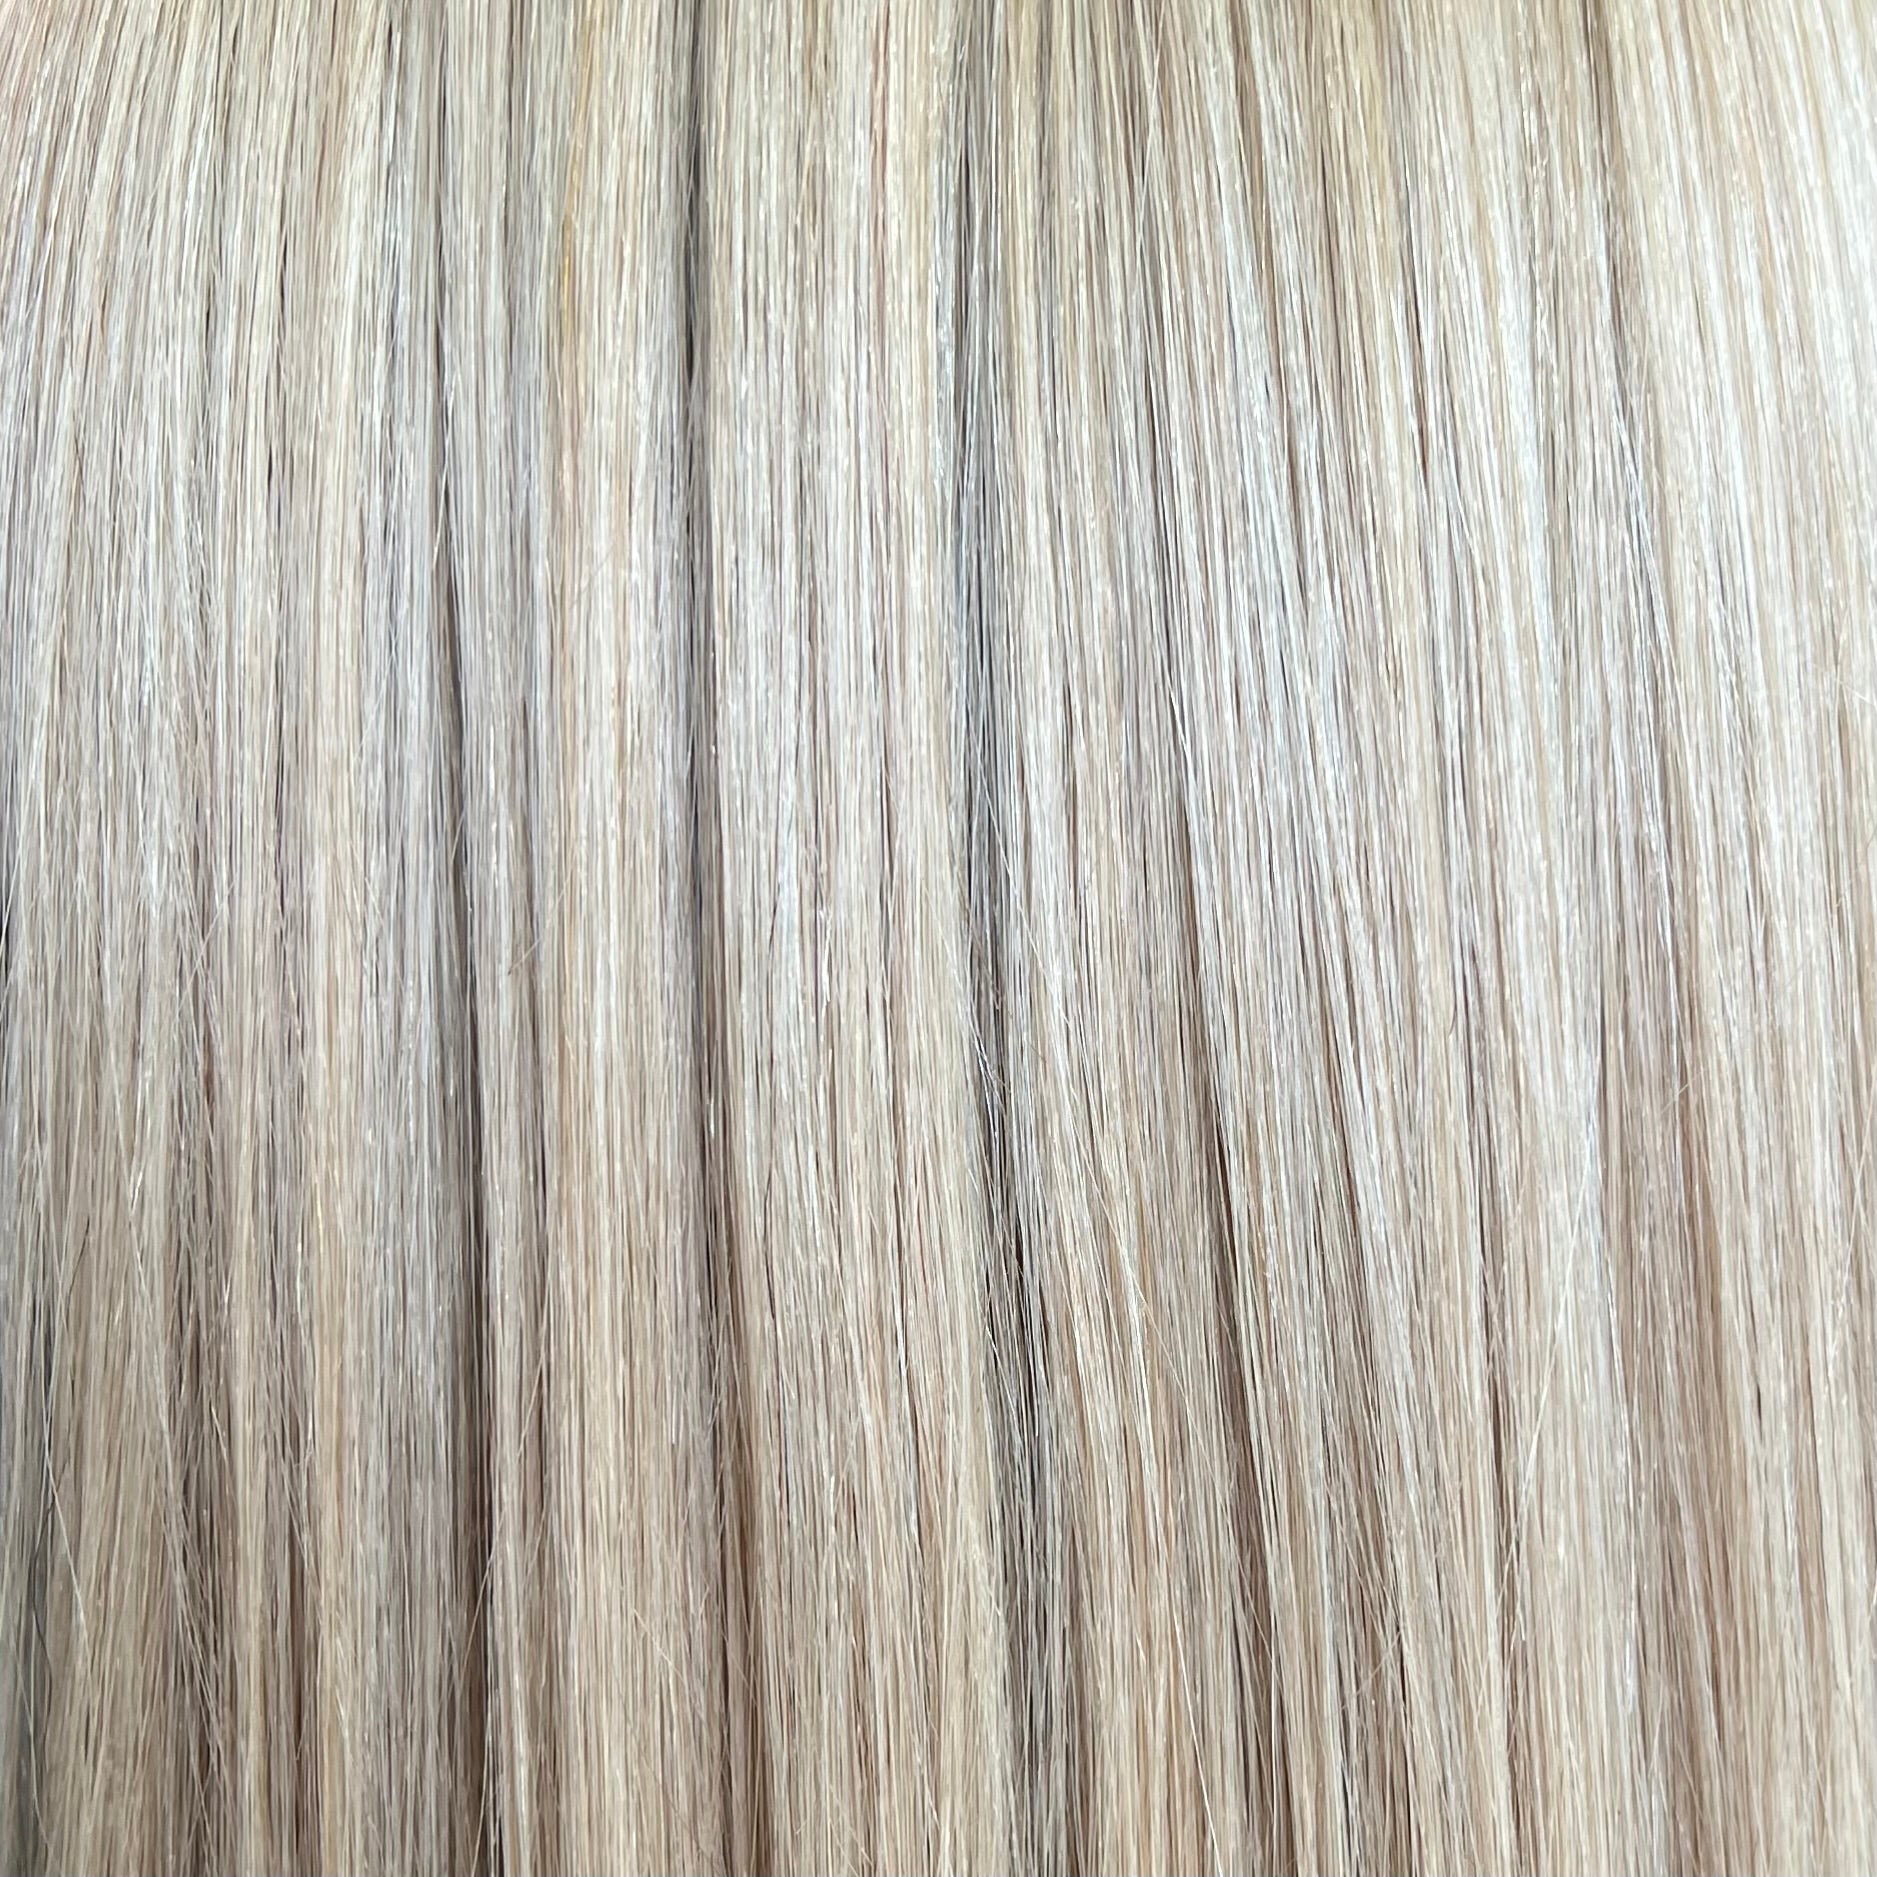 Mixed Blonde Blend - Half Pack Keratin Flat Tips